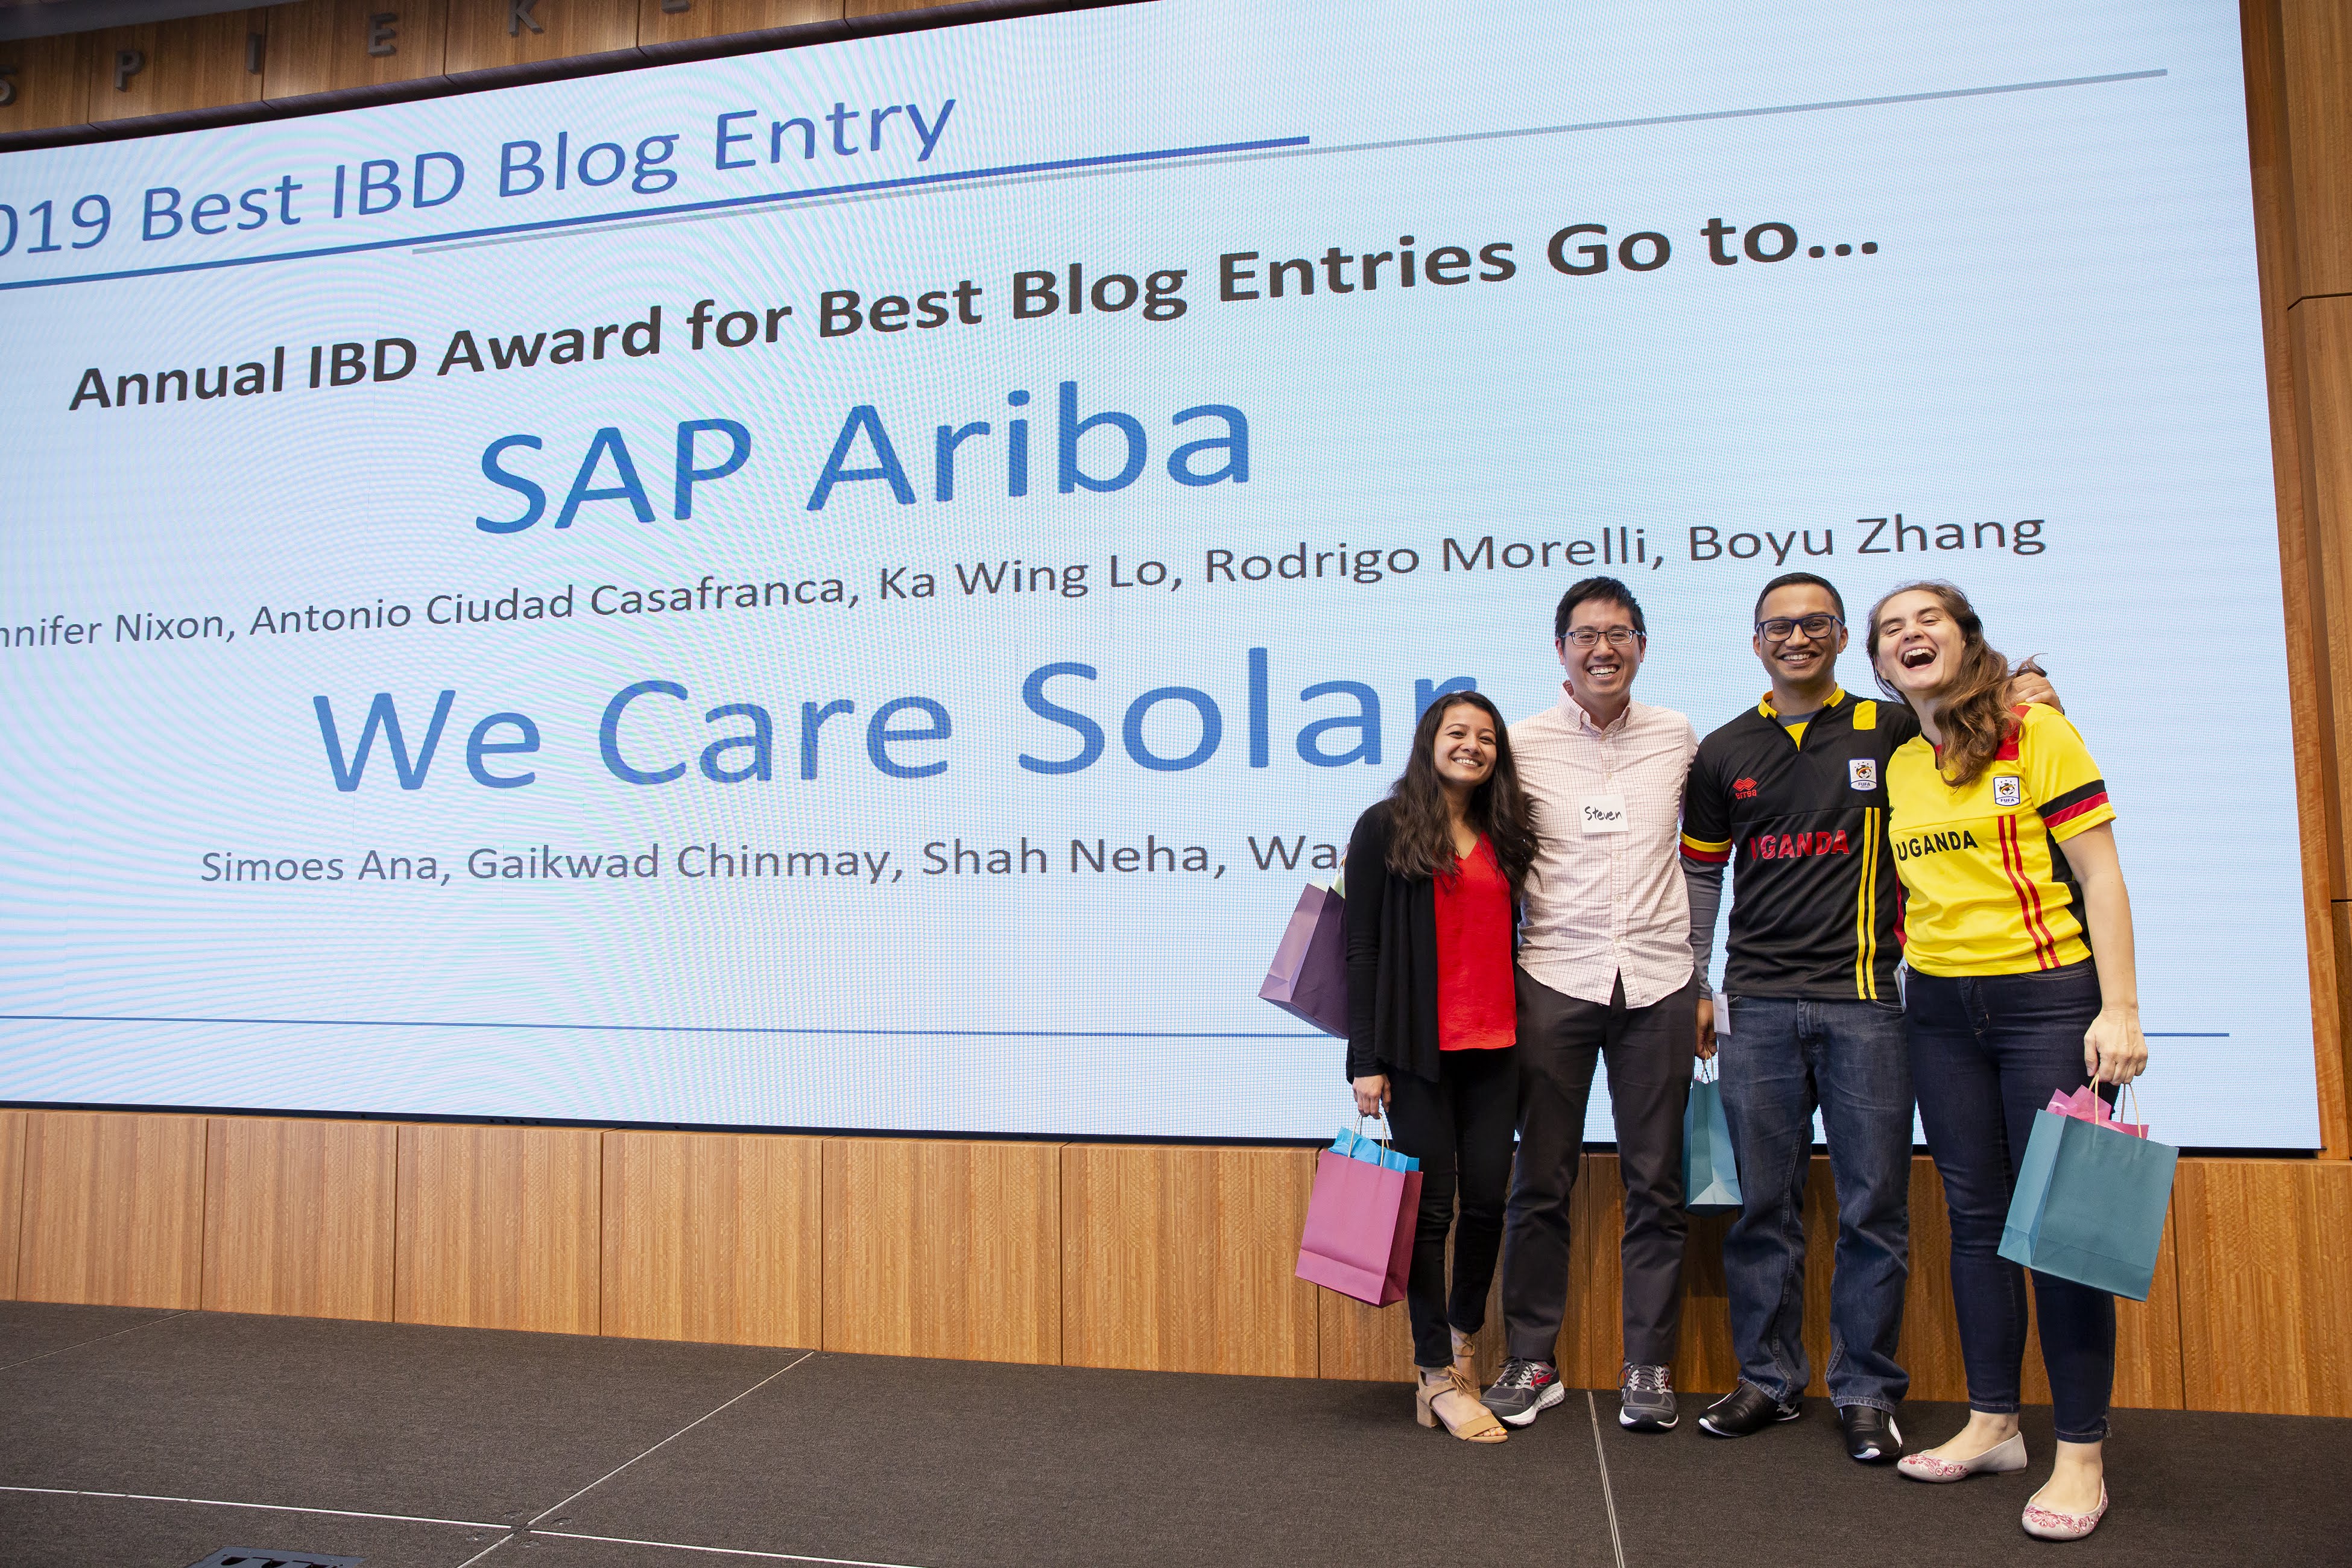 Team We Care Solar receiving their award for winning best blog entry 2019